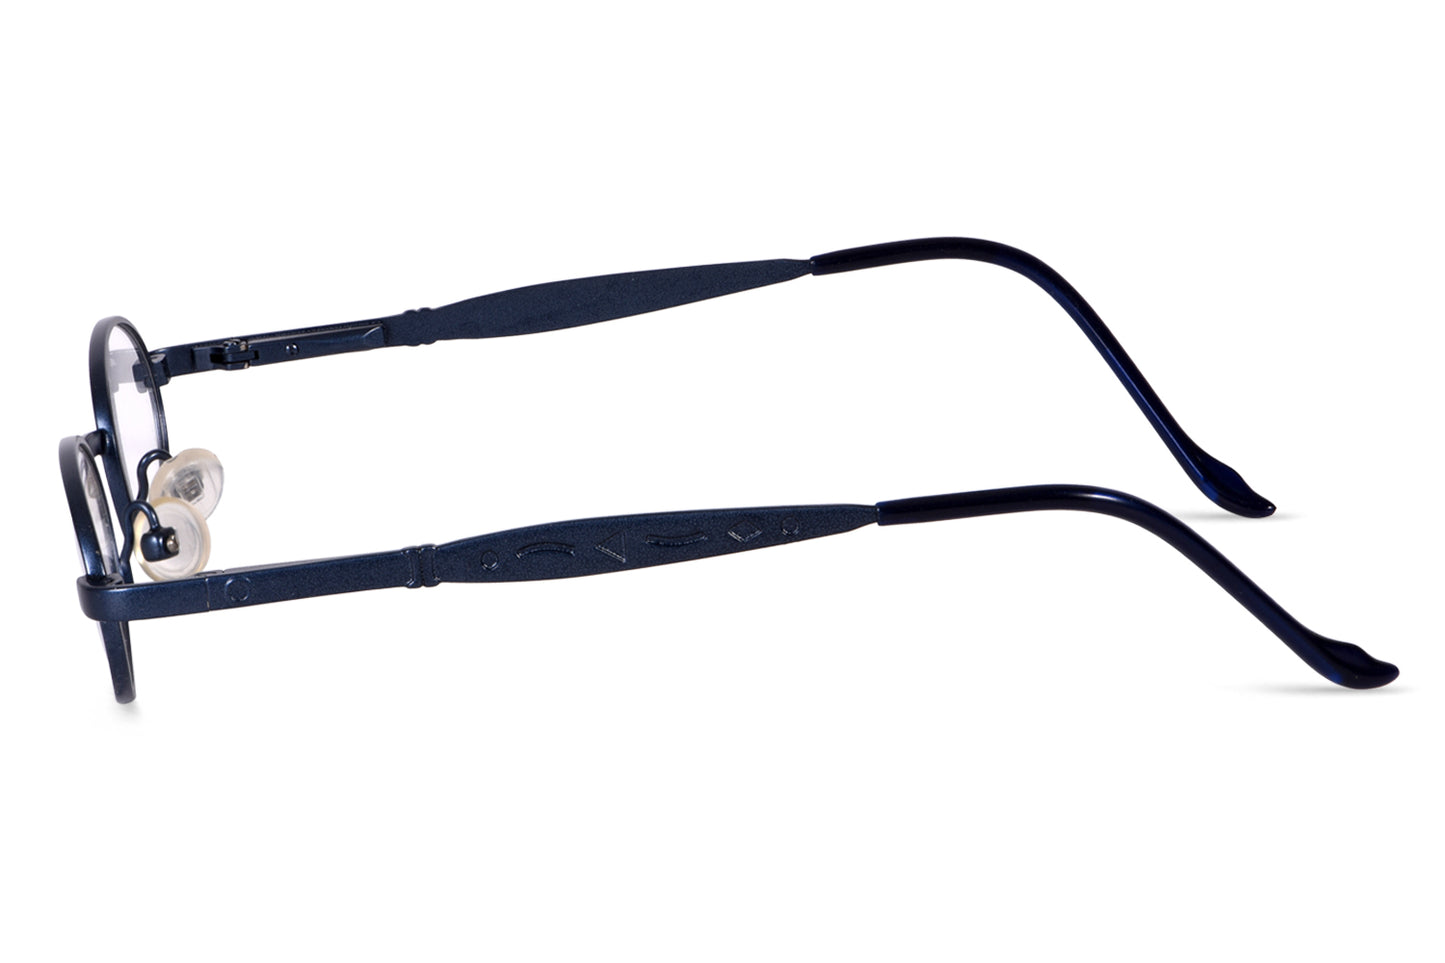 SleekLine SL117-061 Oval Frame Eyeglasses